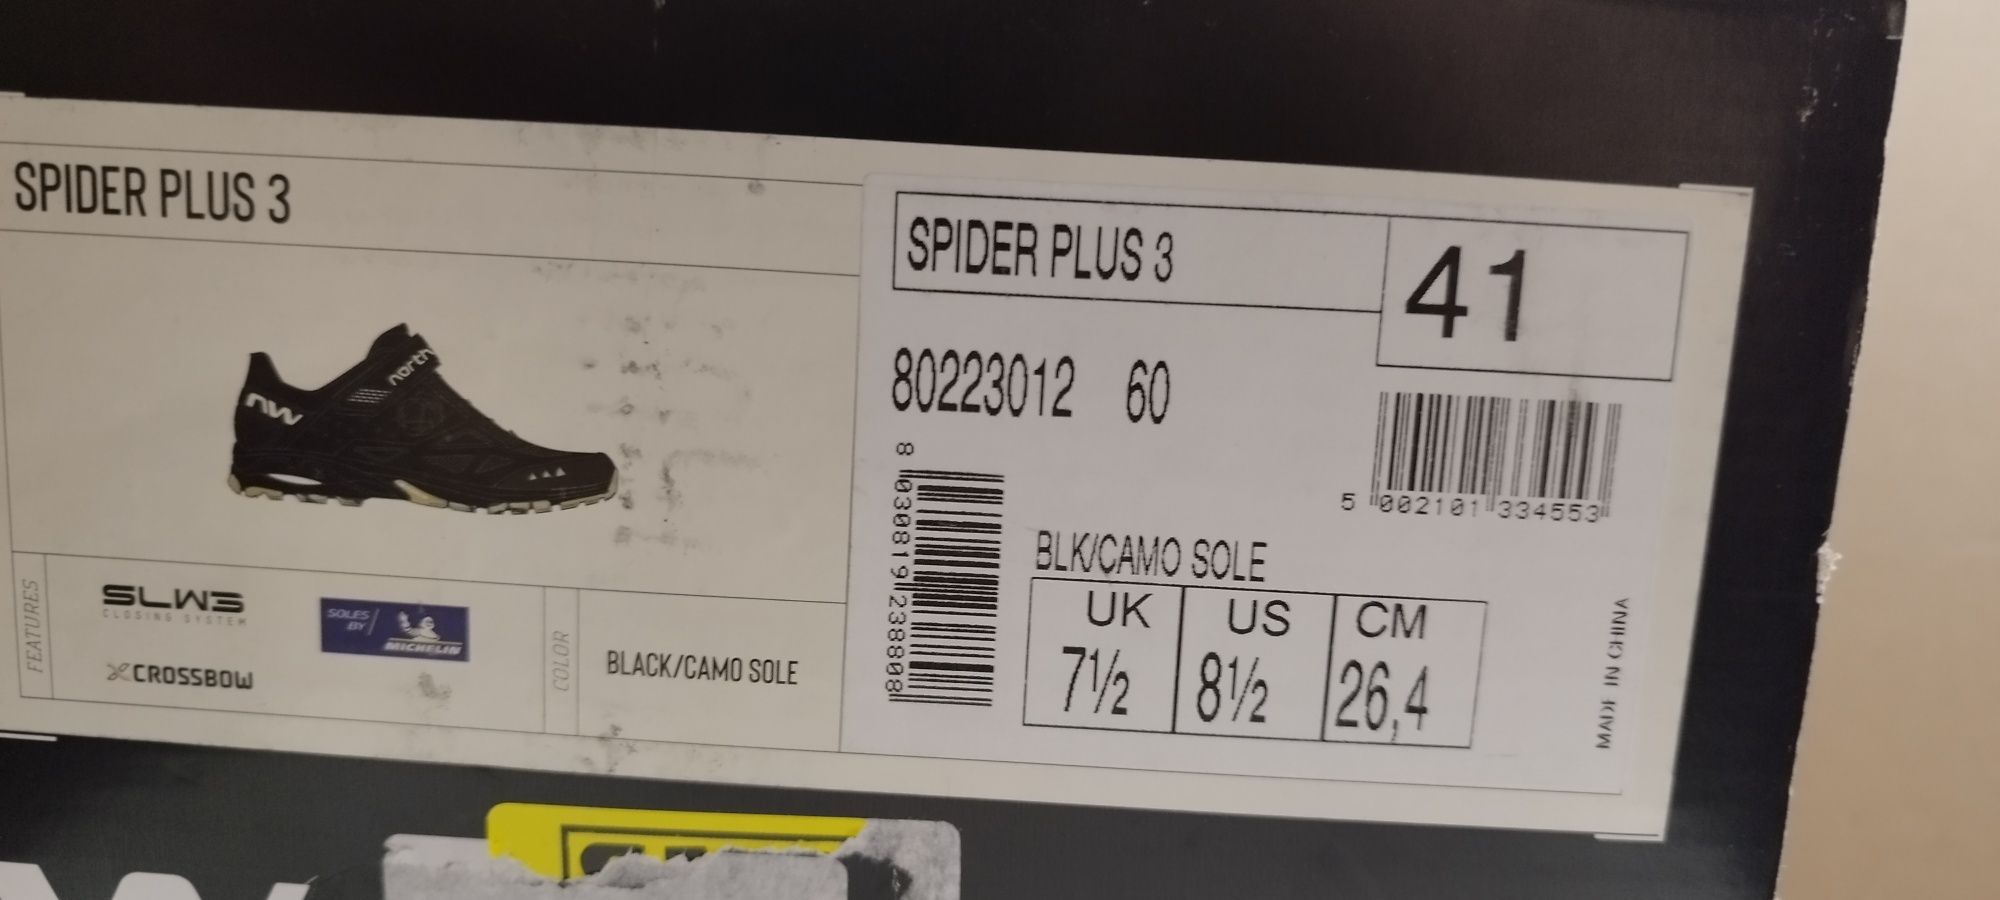 Nowe buty na rower MTB Nothwave Spider Plus 3 rozmiar 41 (26,4cm) BOA